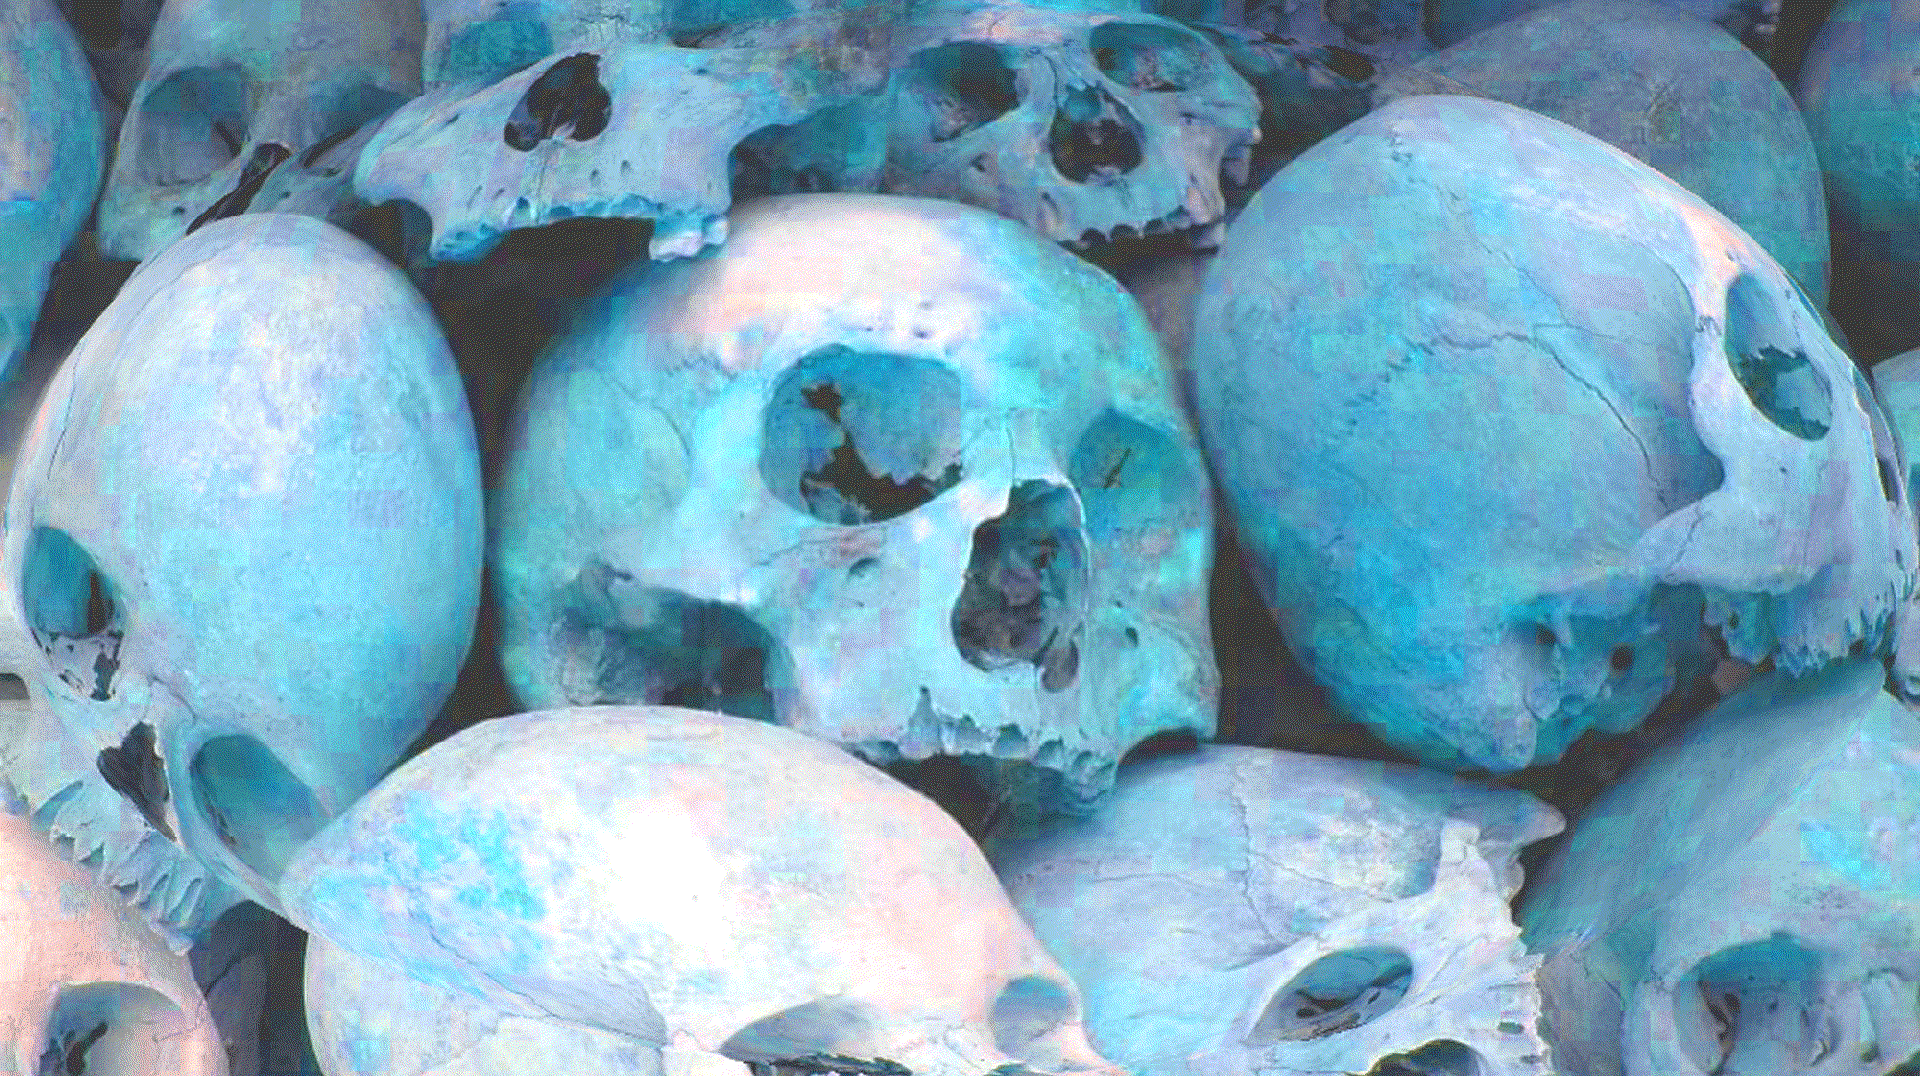 A photo-based illustration showing a mound of skulls 